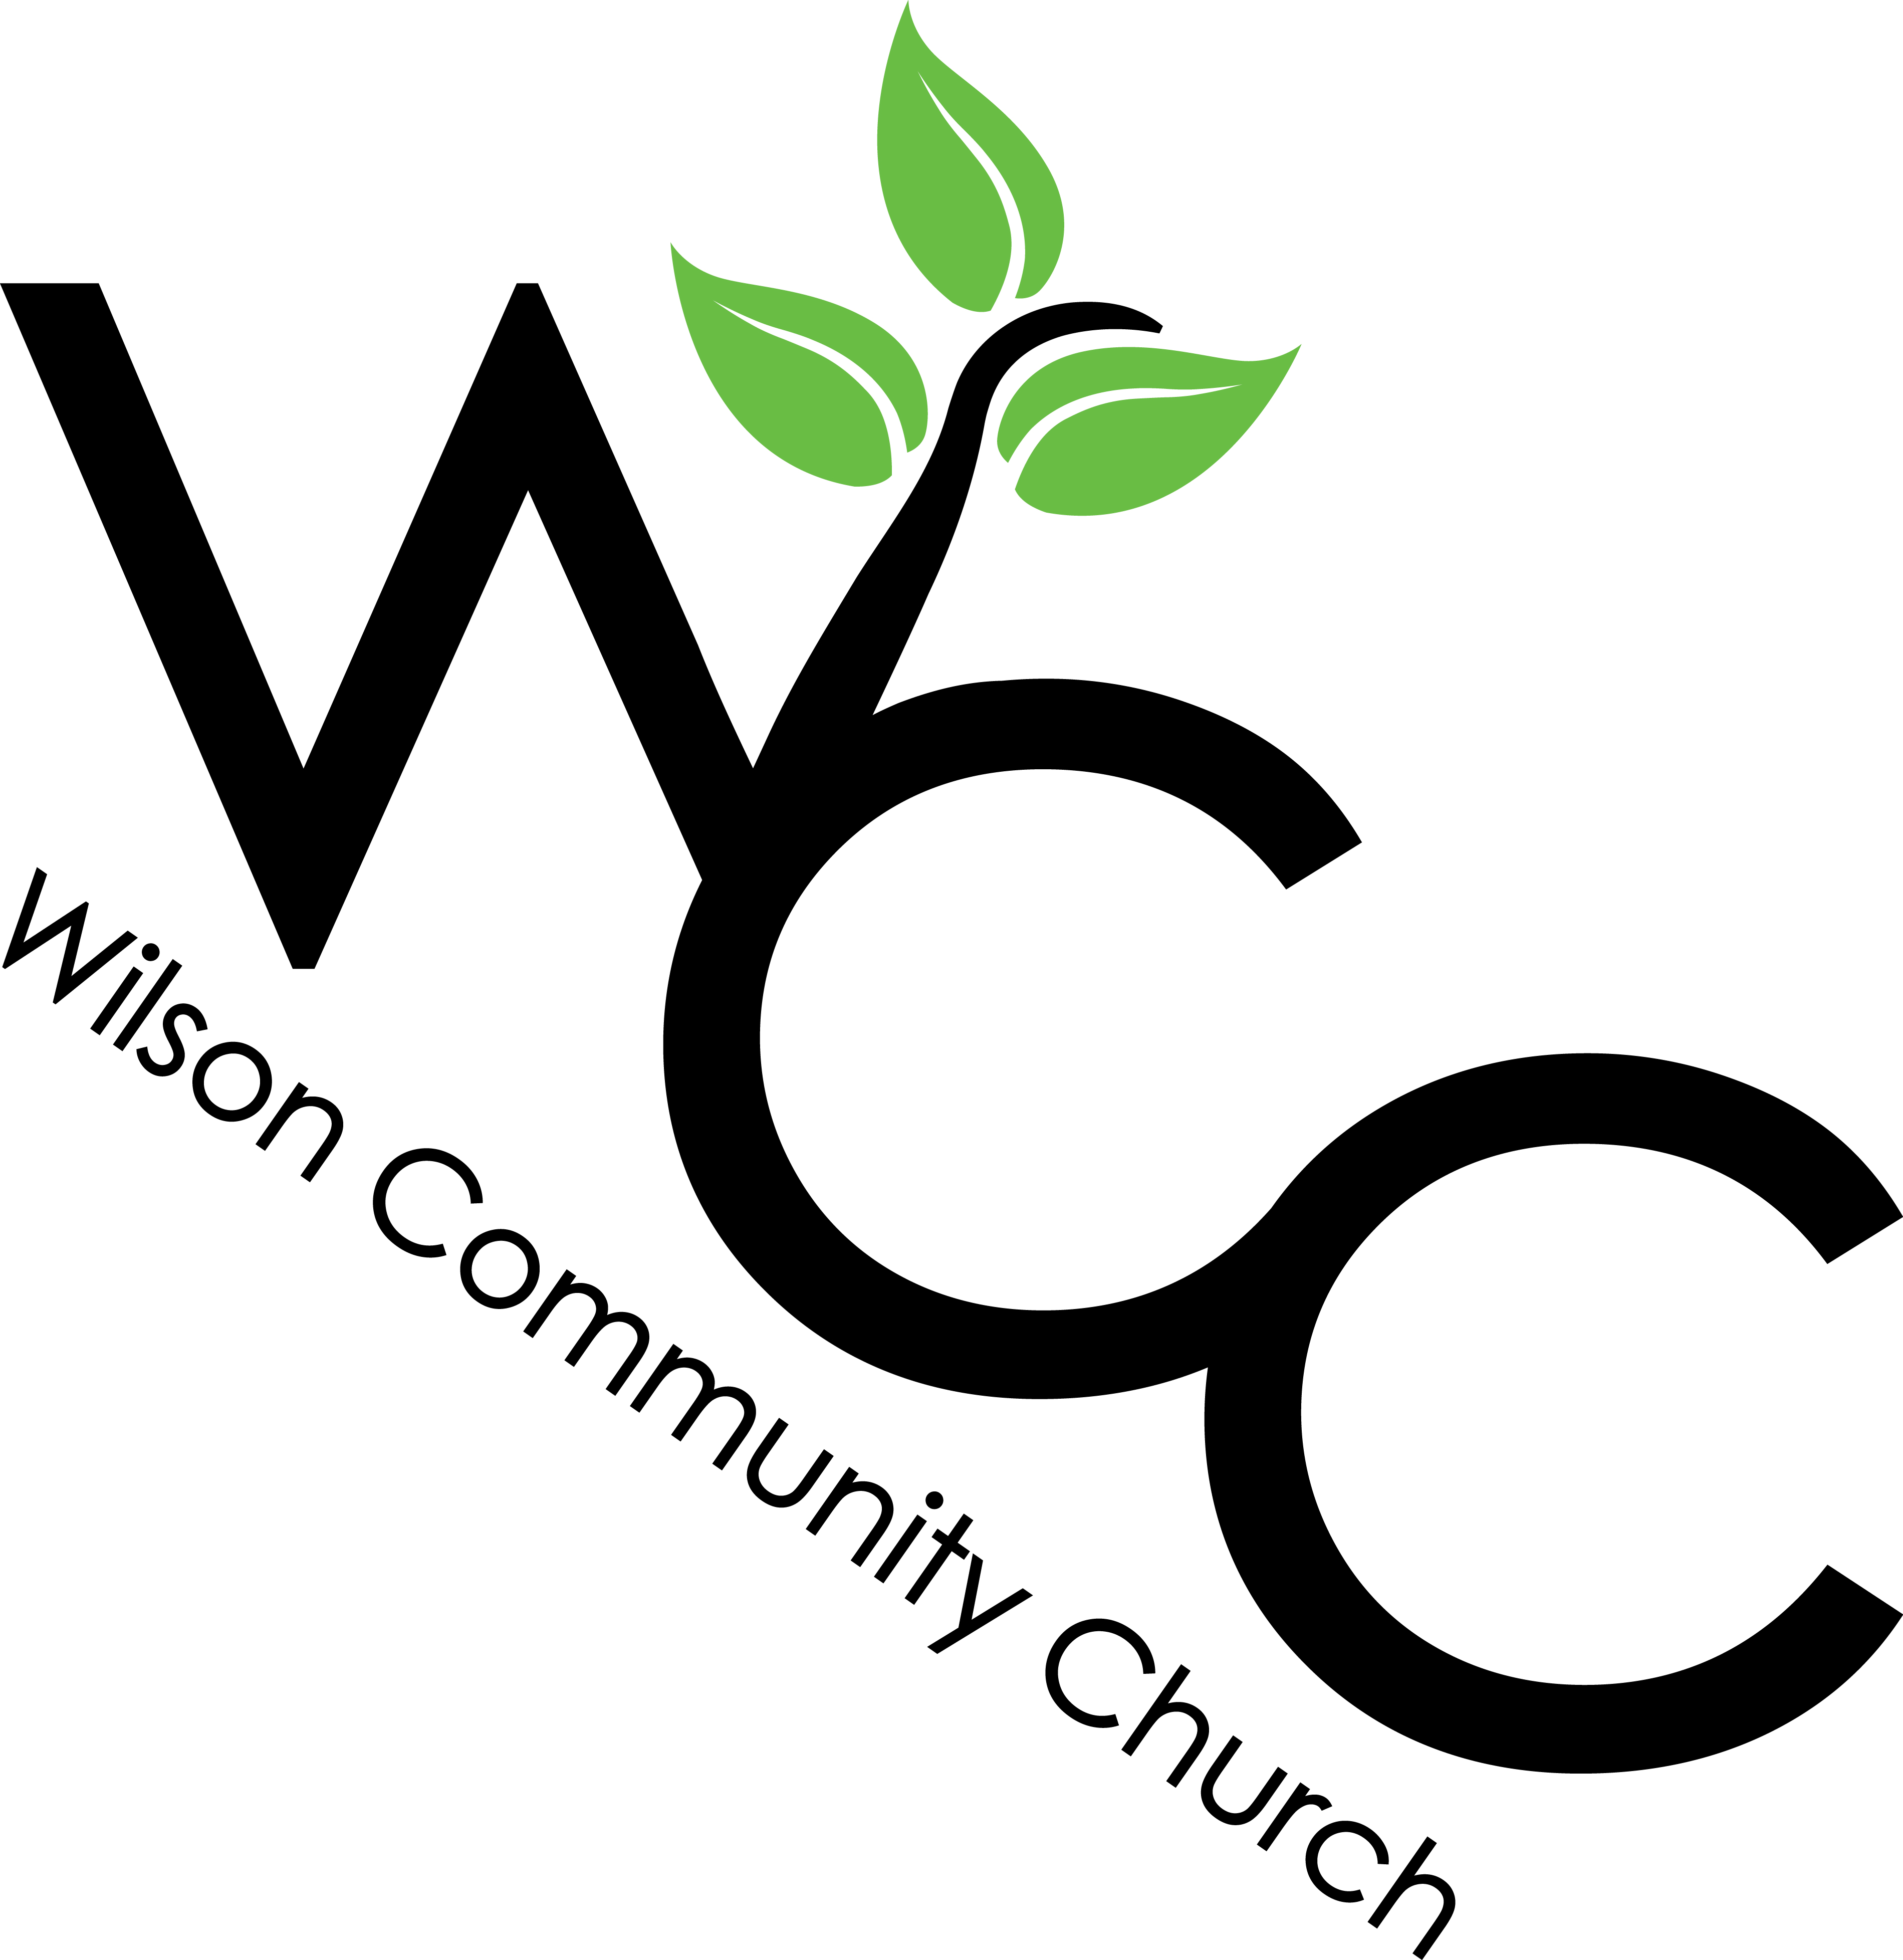 Wilson Community Church